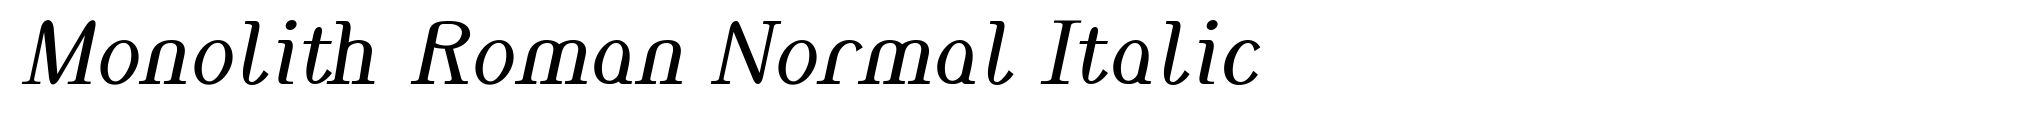 Monolith Roman Normal Italic image